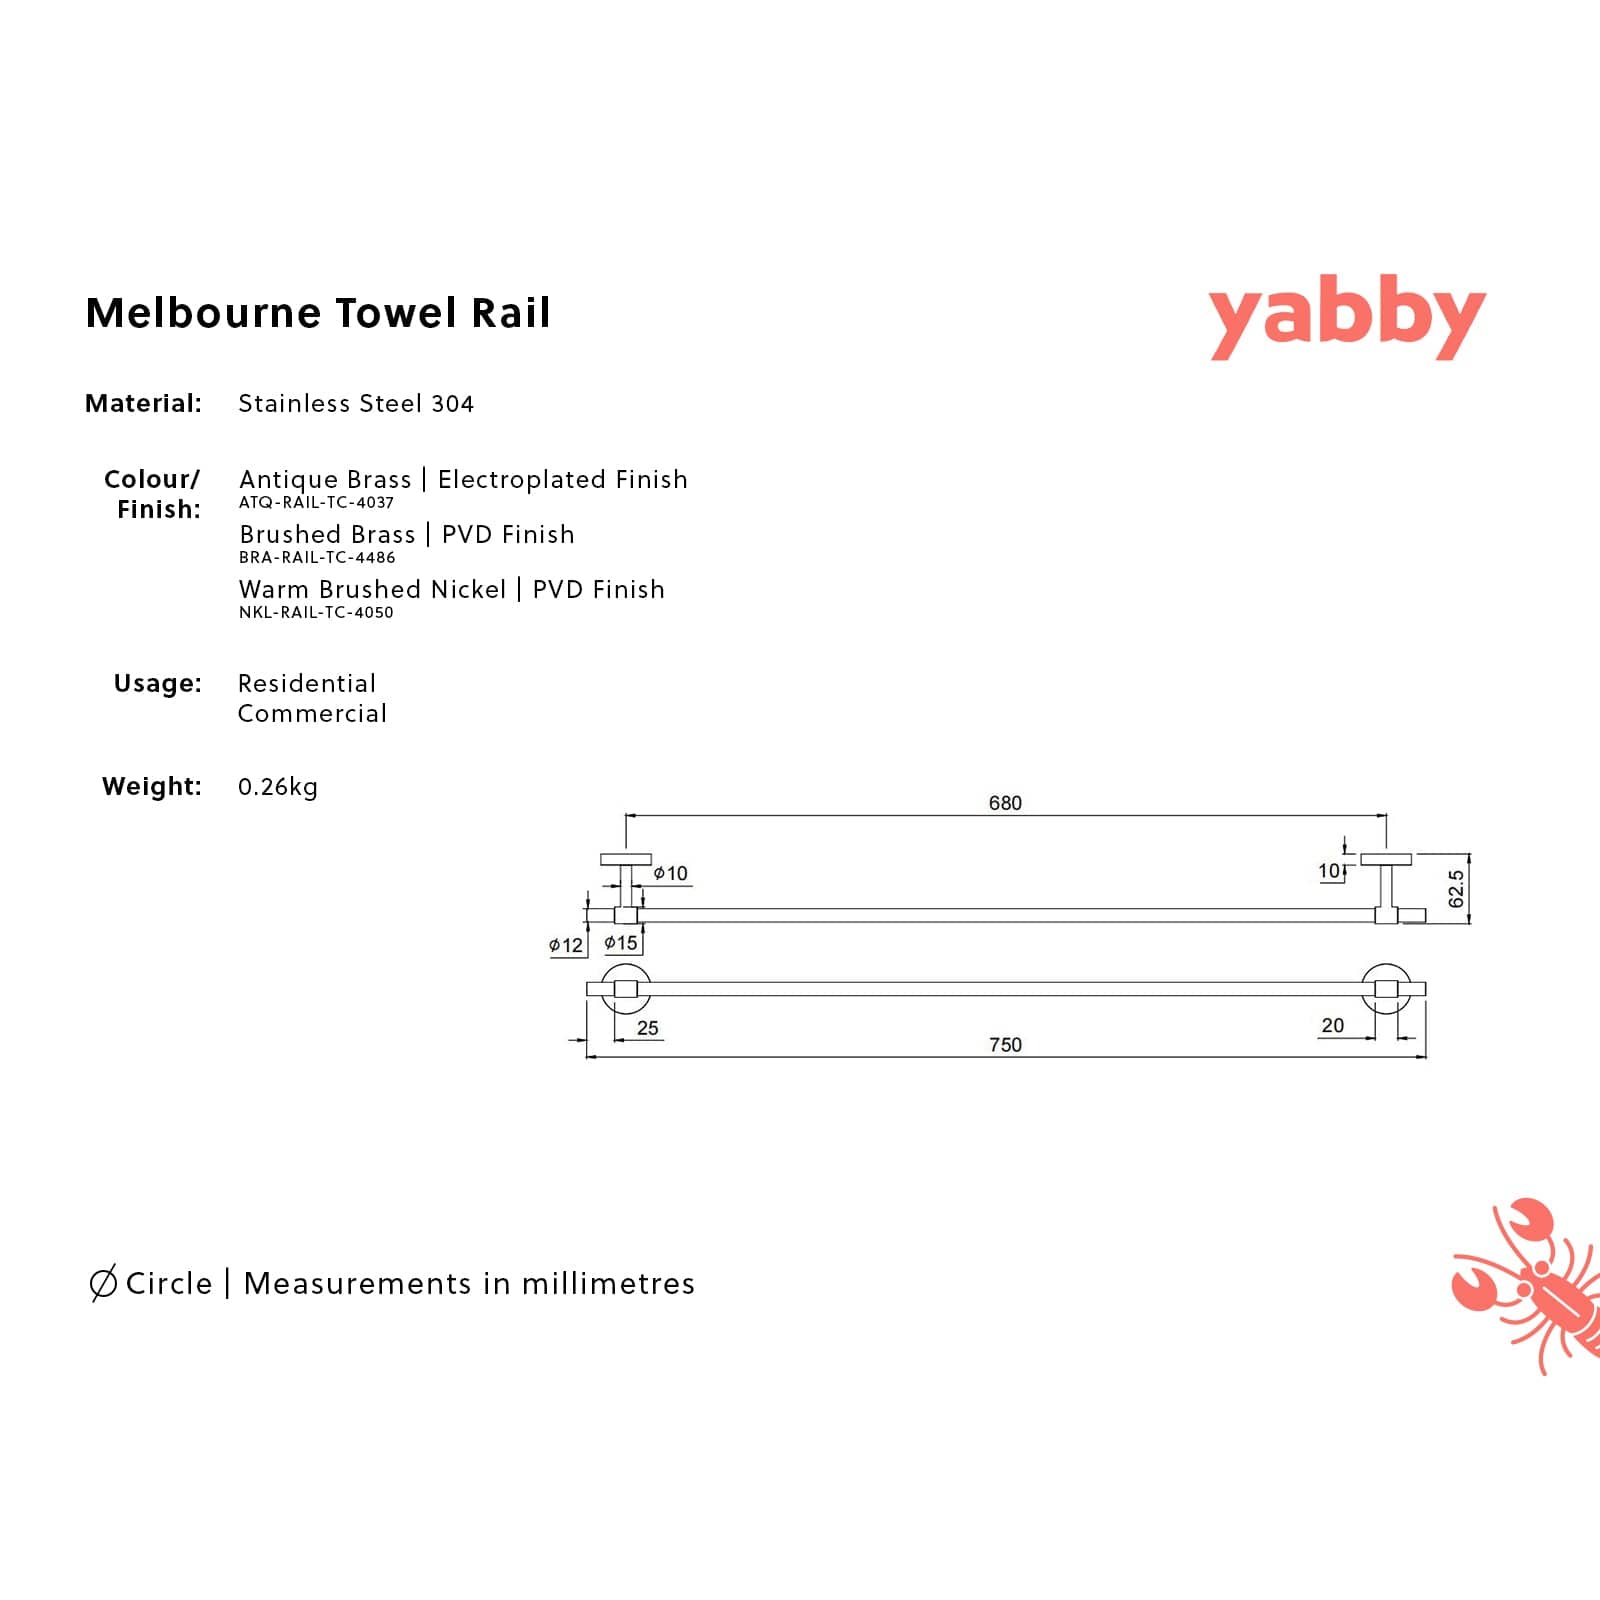 TileCloud TAPWARE Melbourne Towel Rail Warm Brushed Nickel 750mm